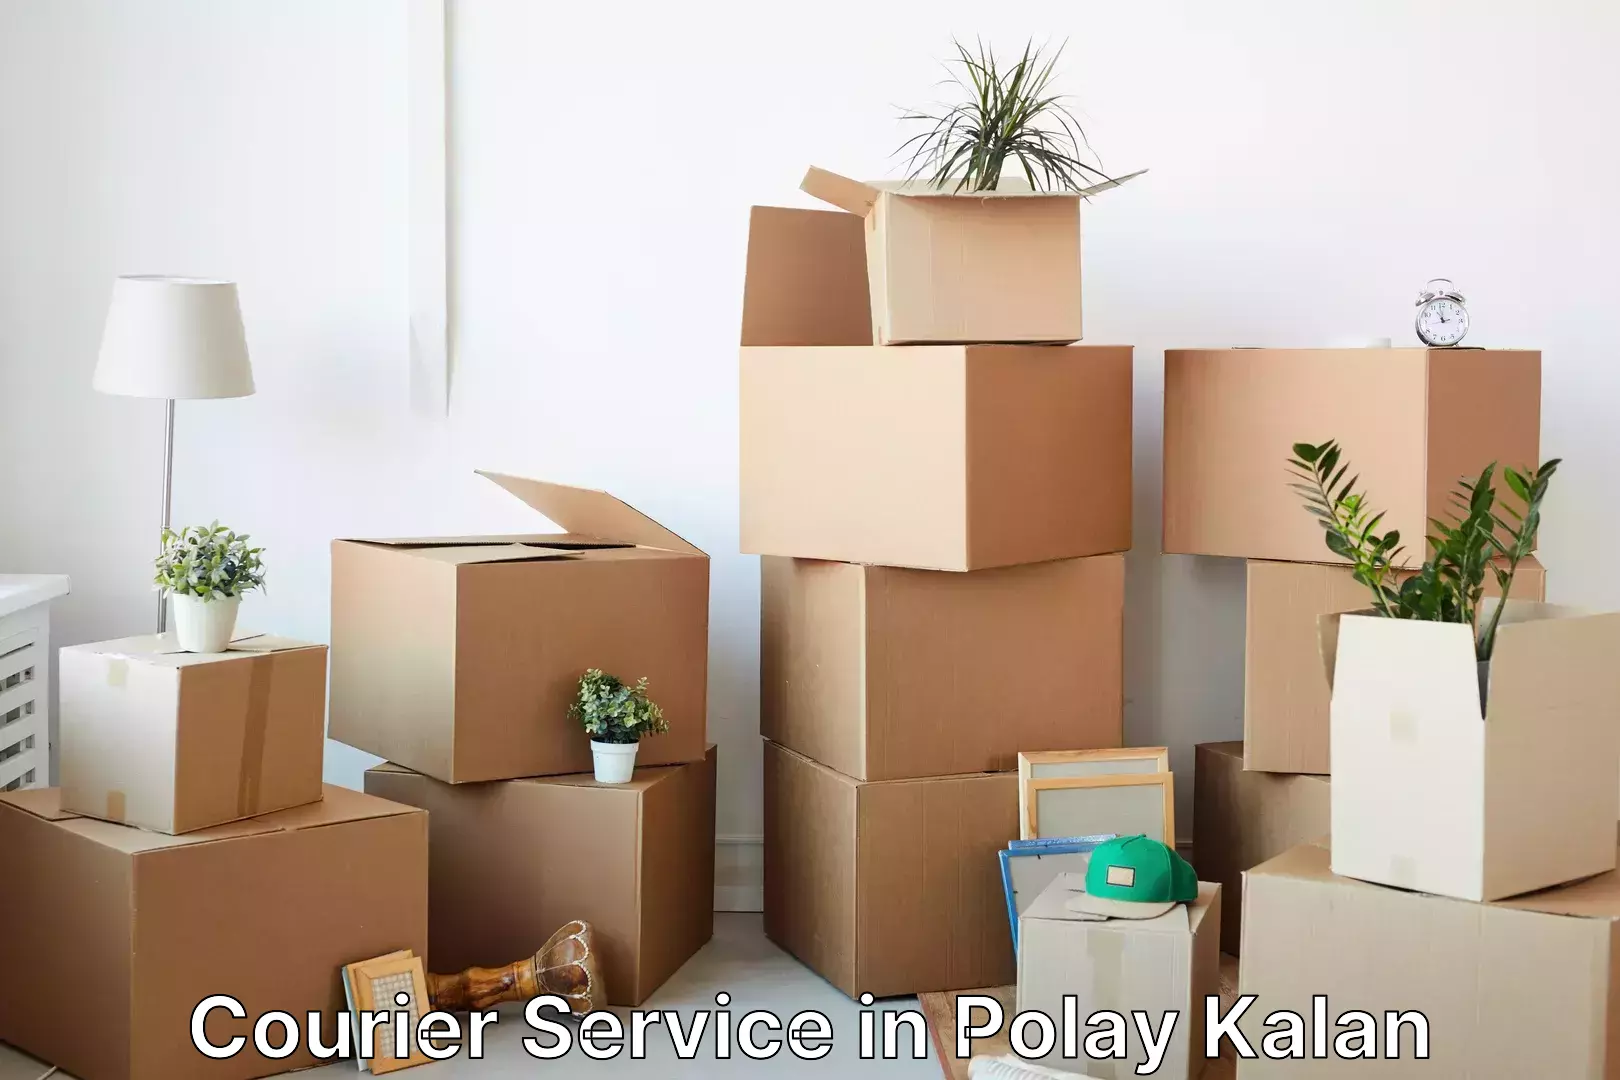 Express postal services in Polay Kalan